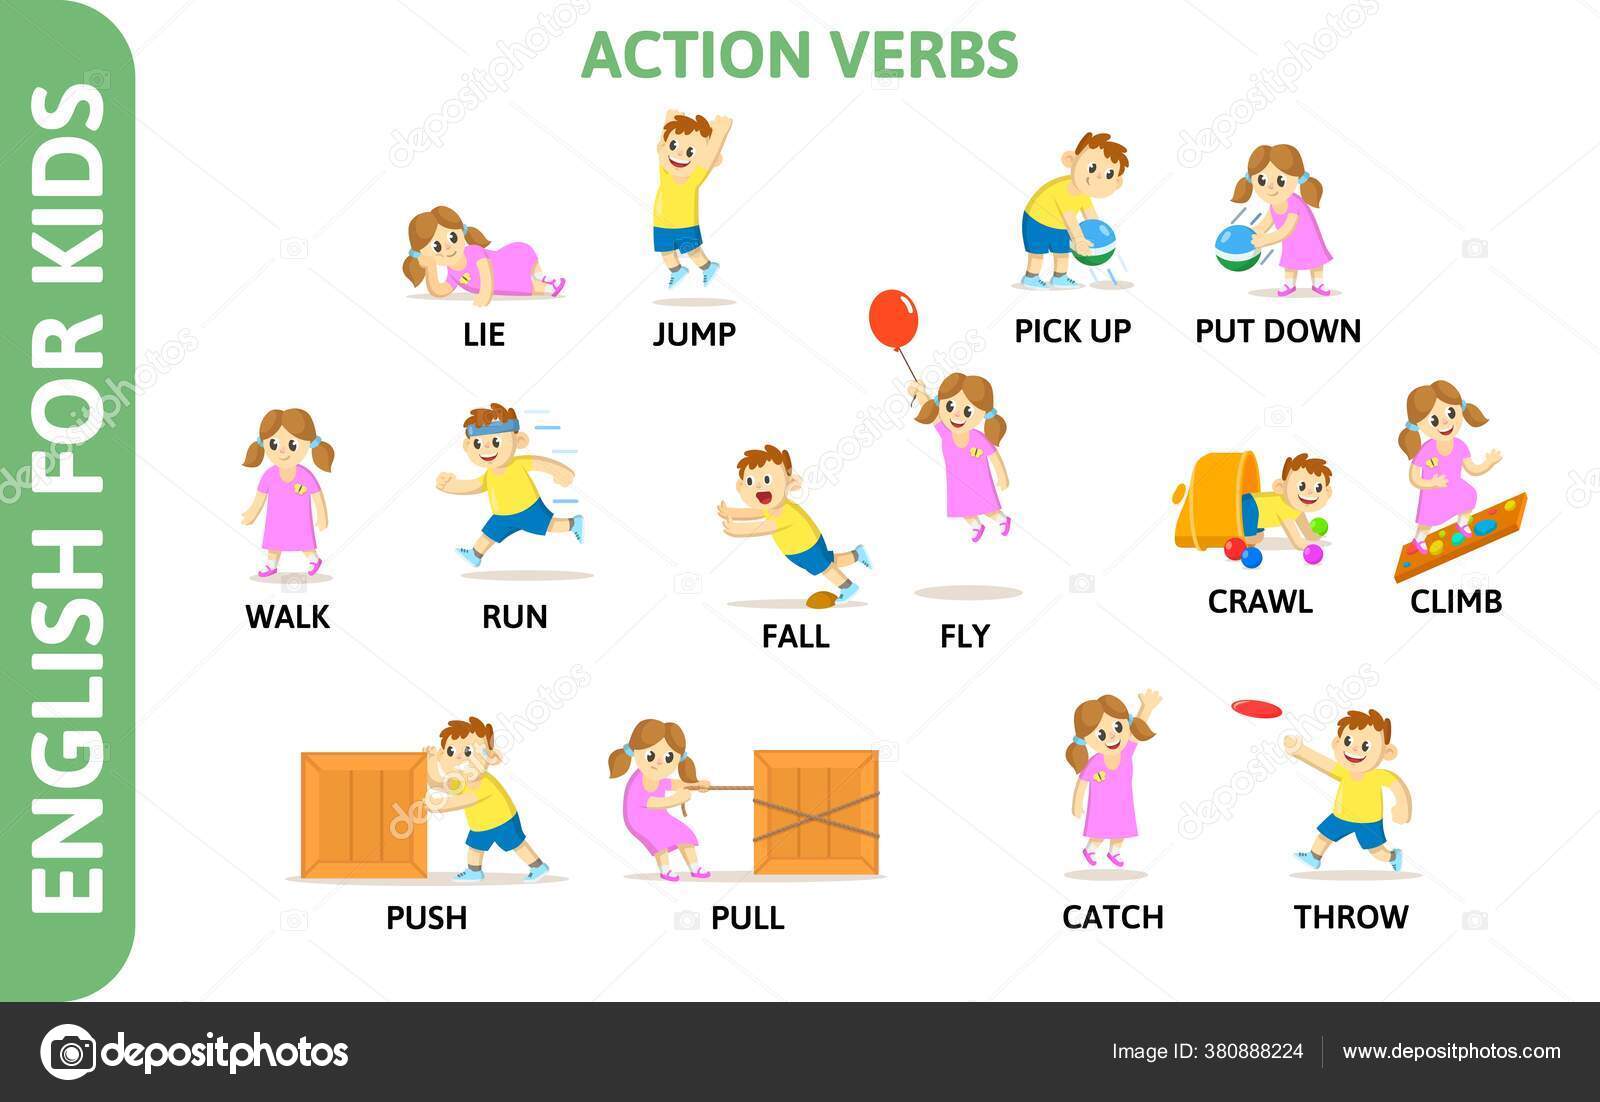 Jogo de cartas - Playing with verbs